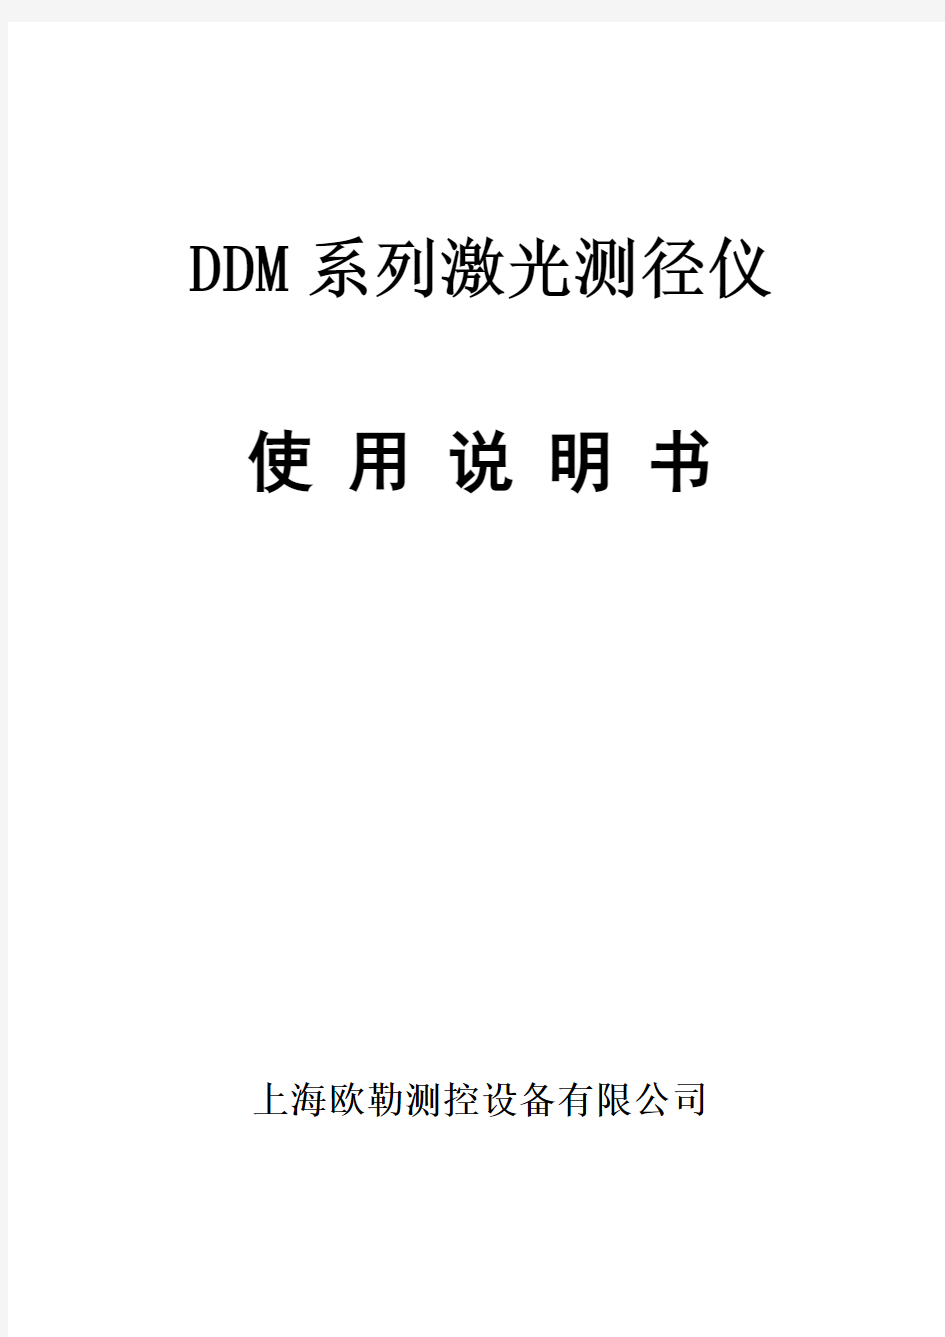 DDM测径仪系列使用说明书新